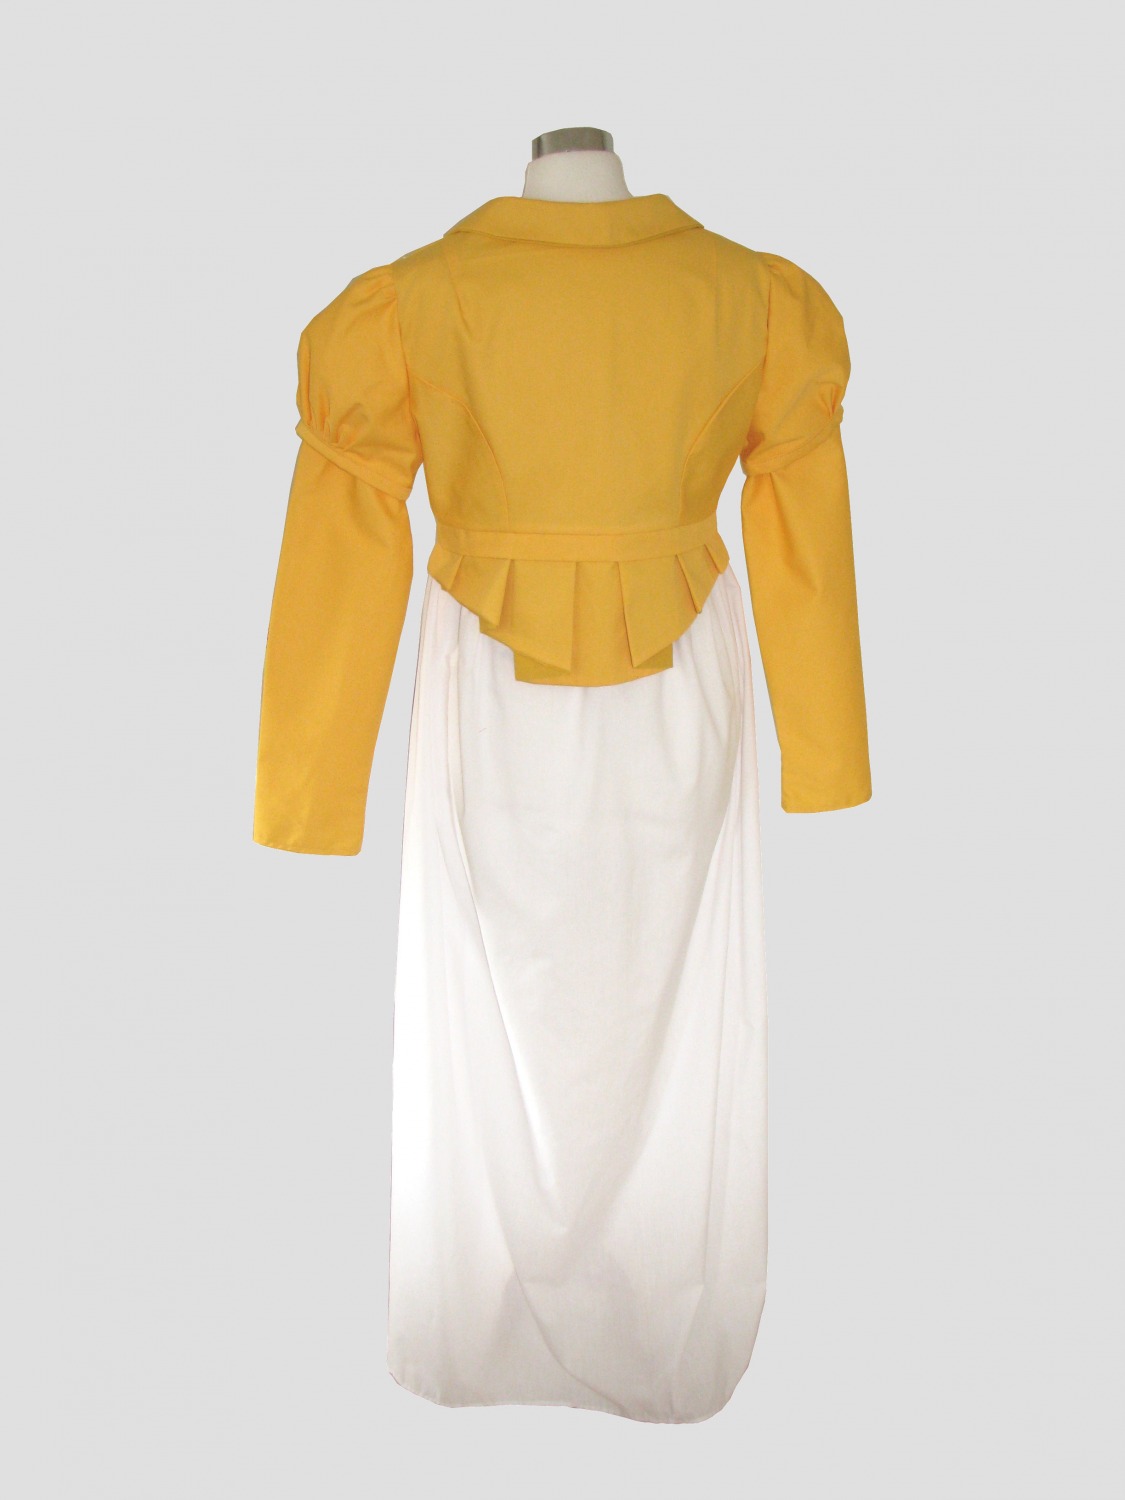 Ladies 19th Century Regency Jane Austen Costume Size 12 - 14 Image